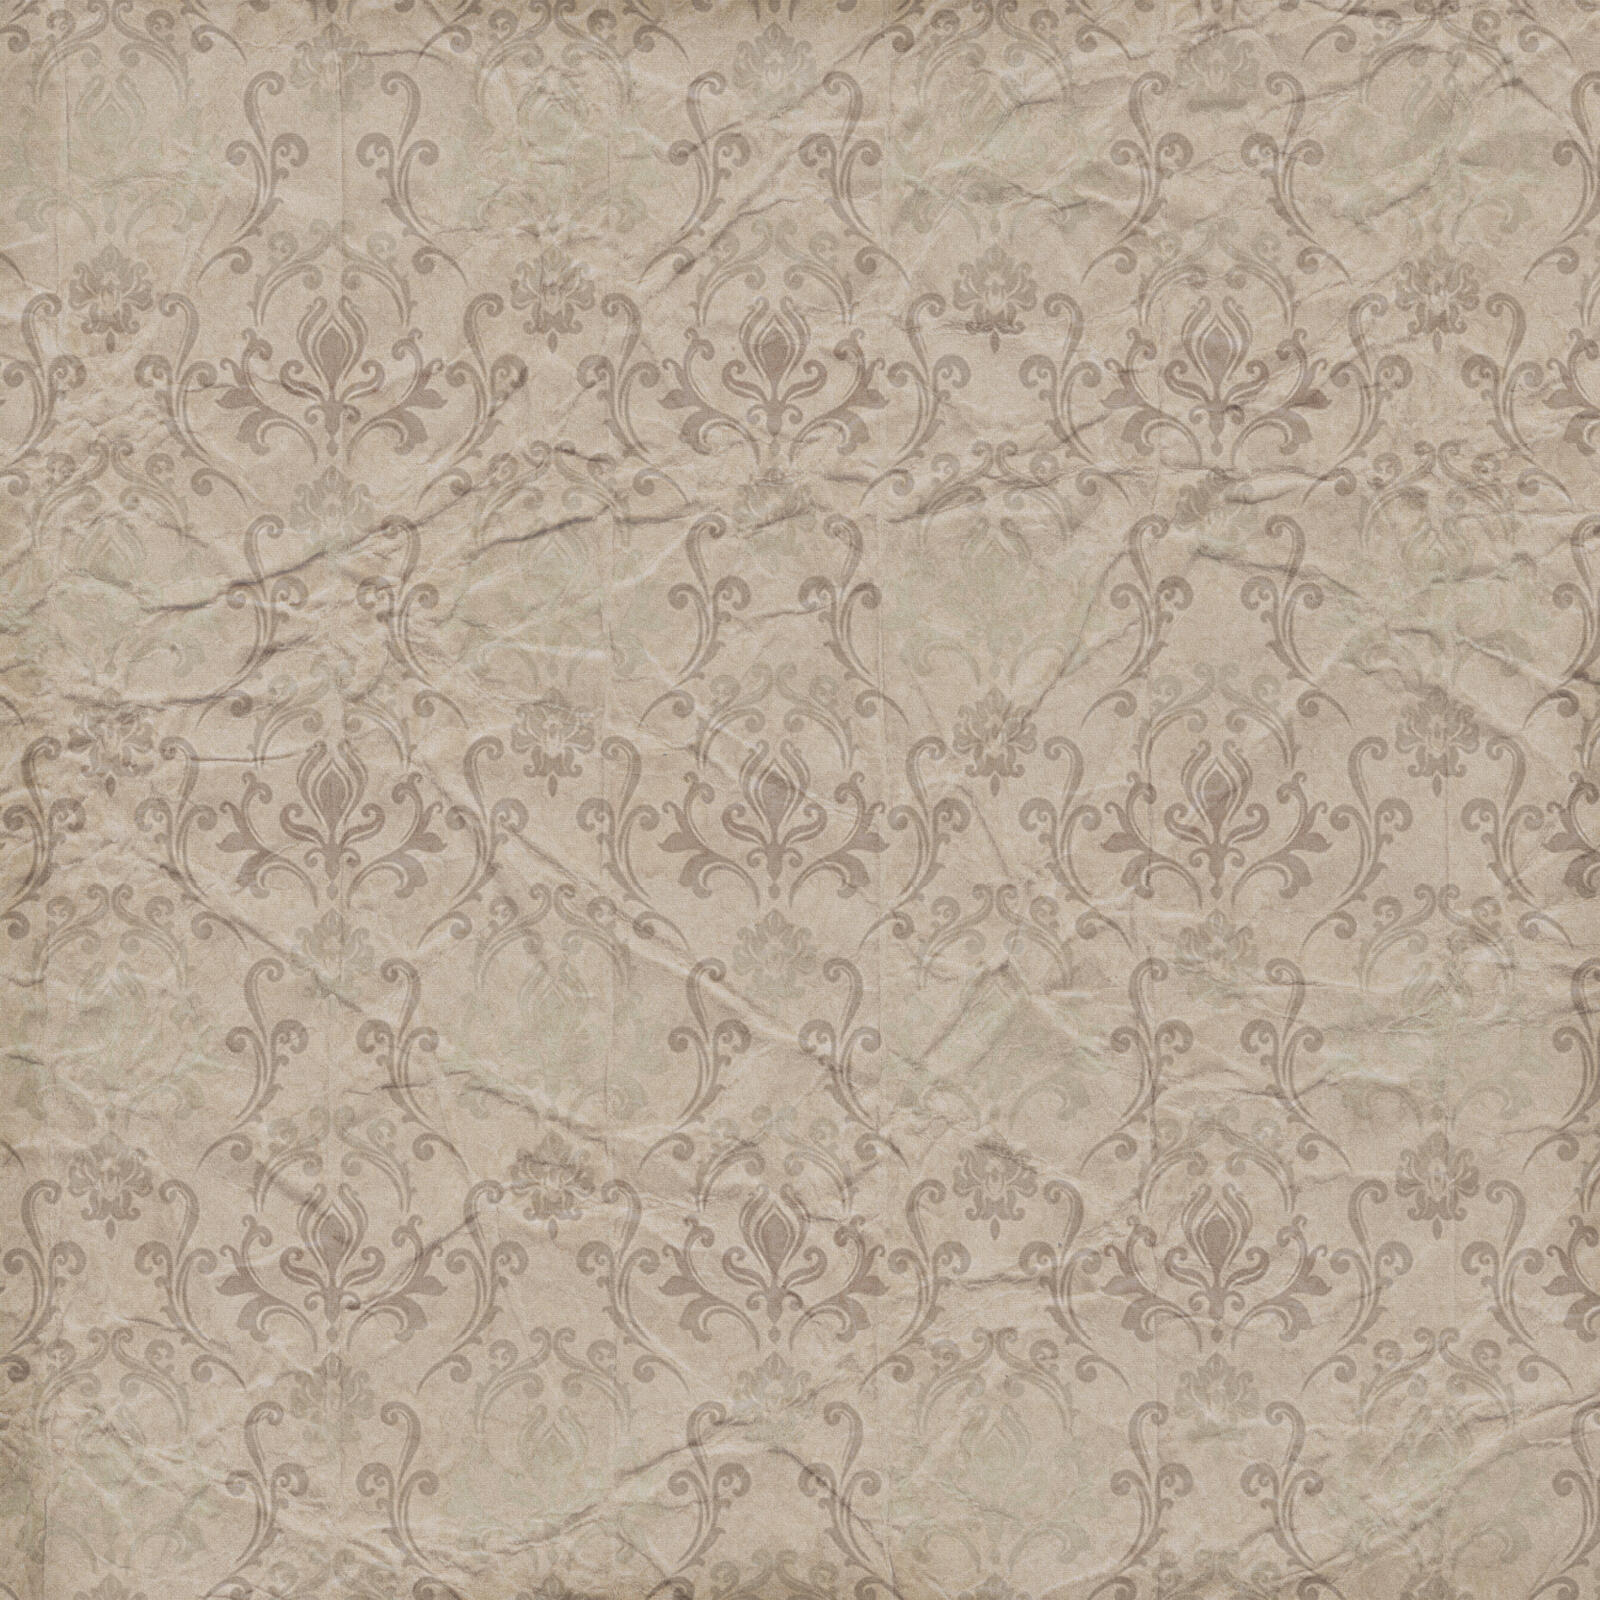 Wallpapers vintage pattern texture on the desktop